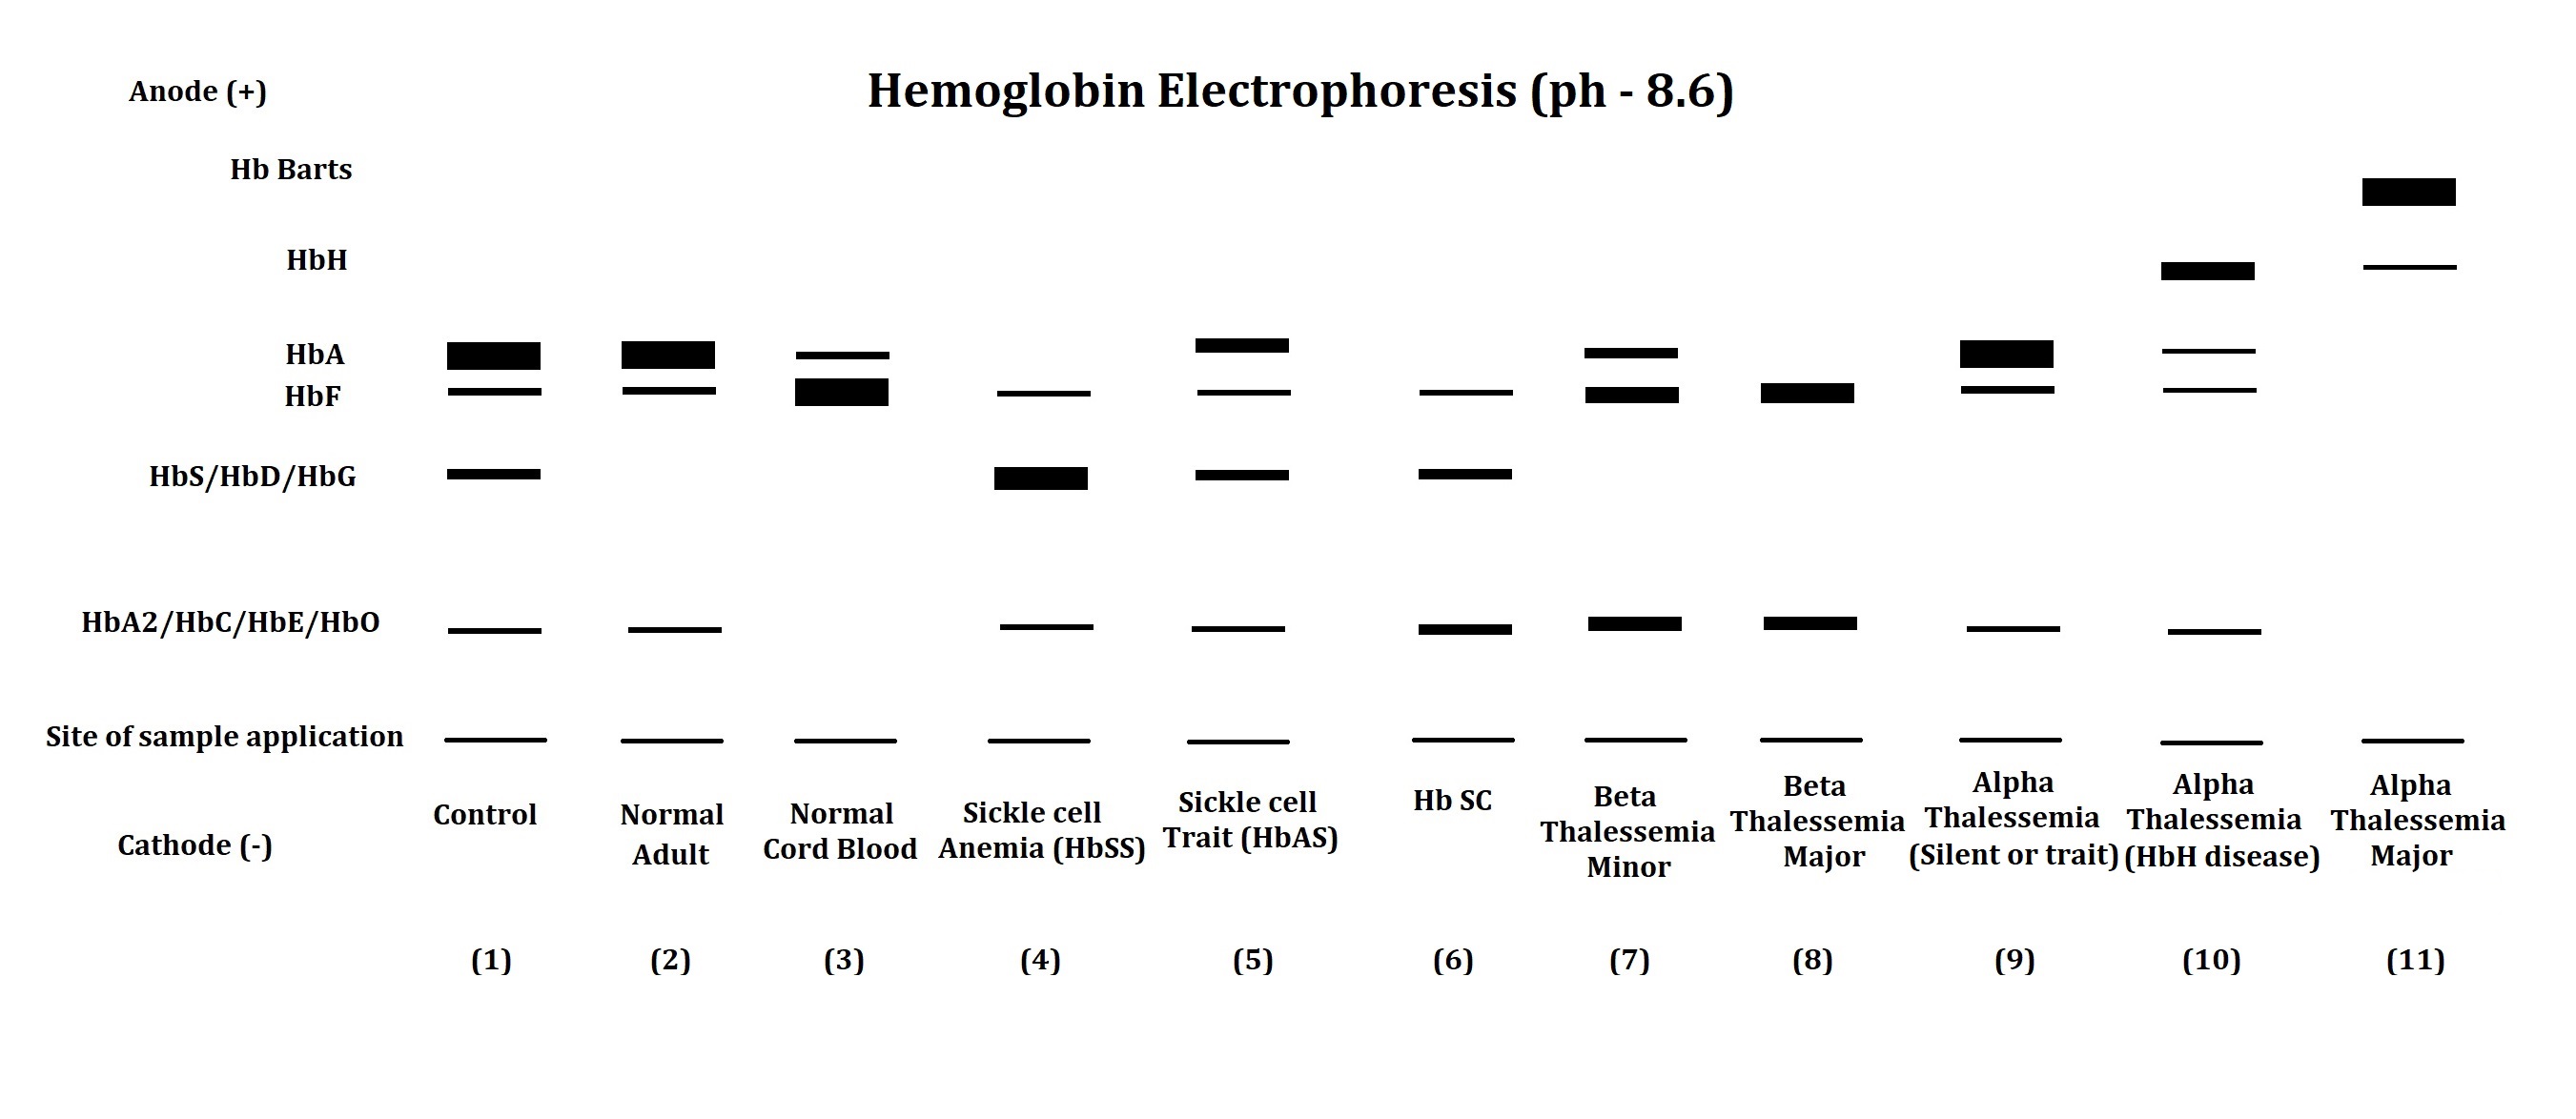 <p>Hemoglobin Electrophoresis Patterns of Hemoglobin Disorders